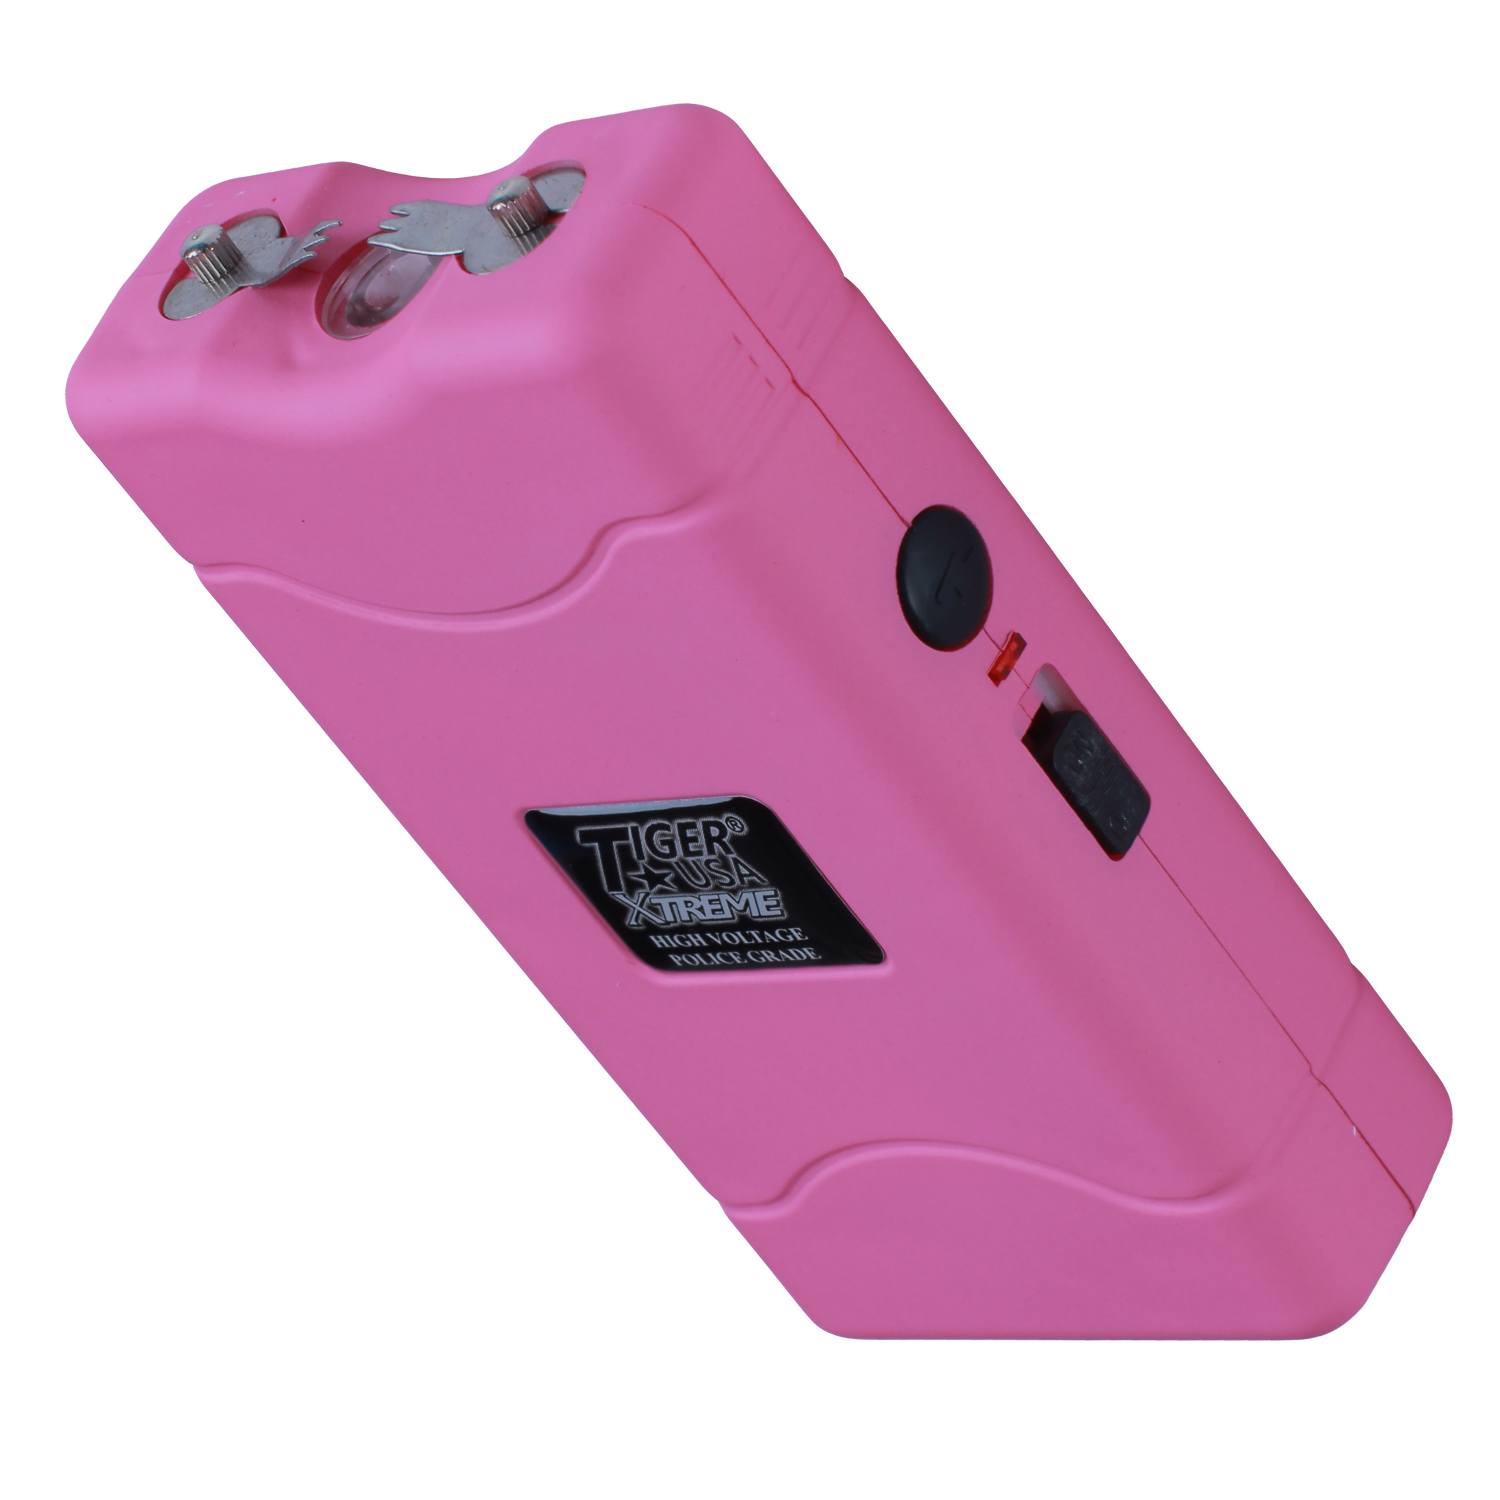 96 Mill Hot Pink Rechargeable Stun Gun and Flash Light